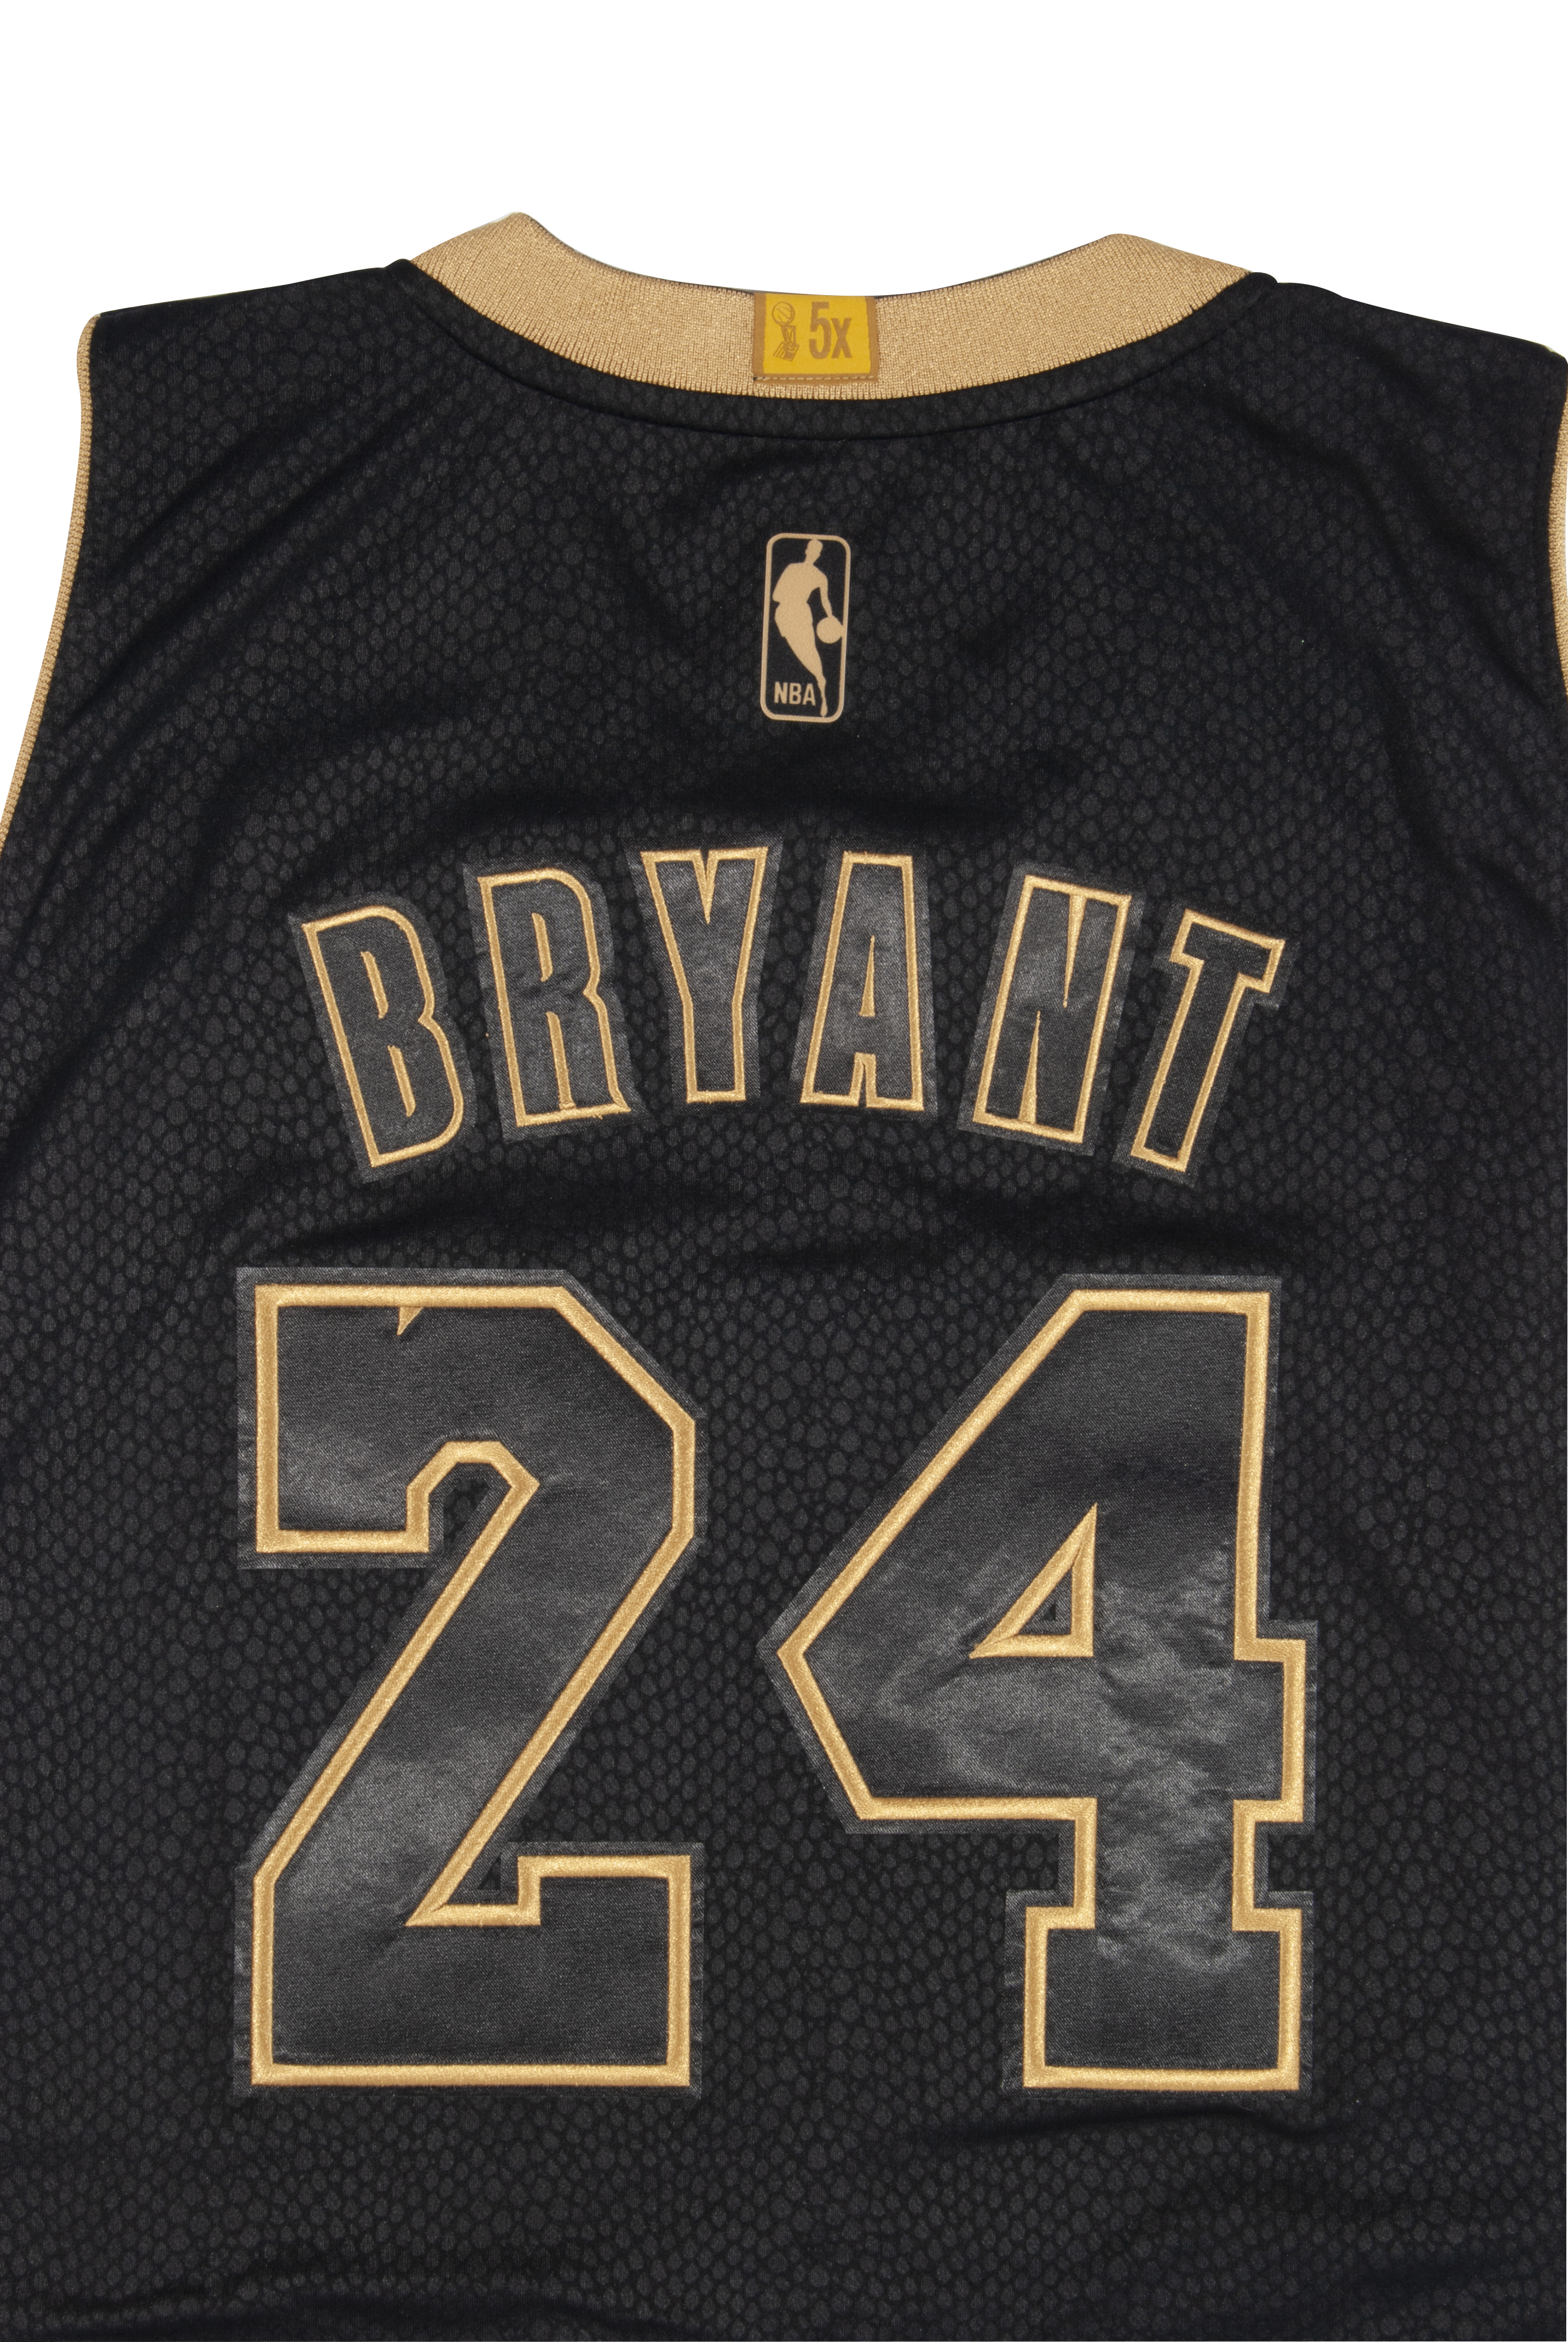 Kobe Bryant NBA Jersey Number Retirement Solid Bronze Commemorative  Medallion